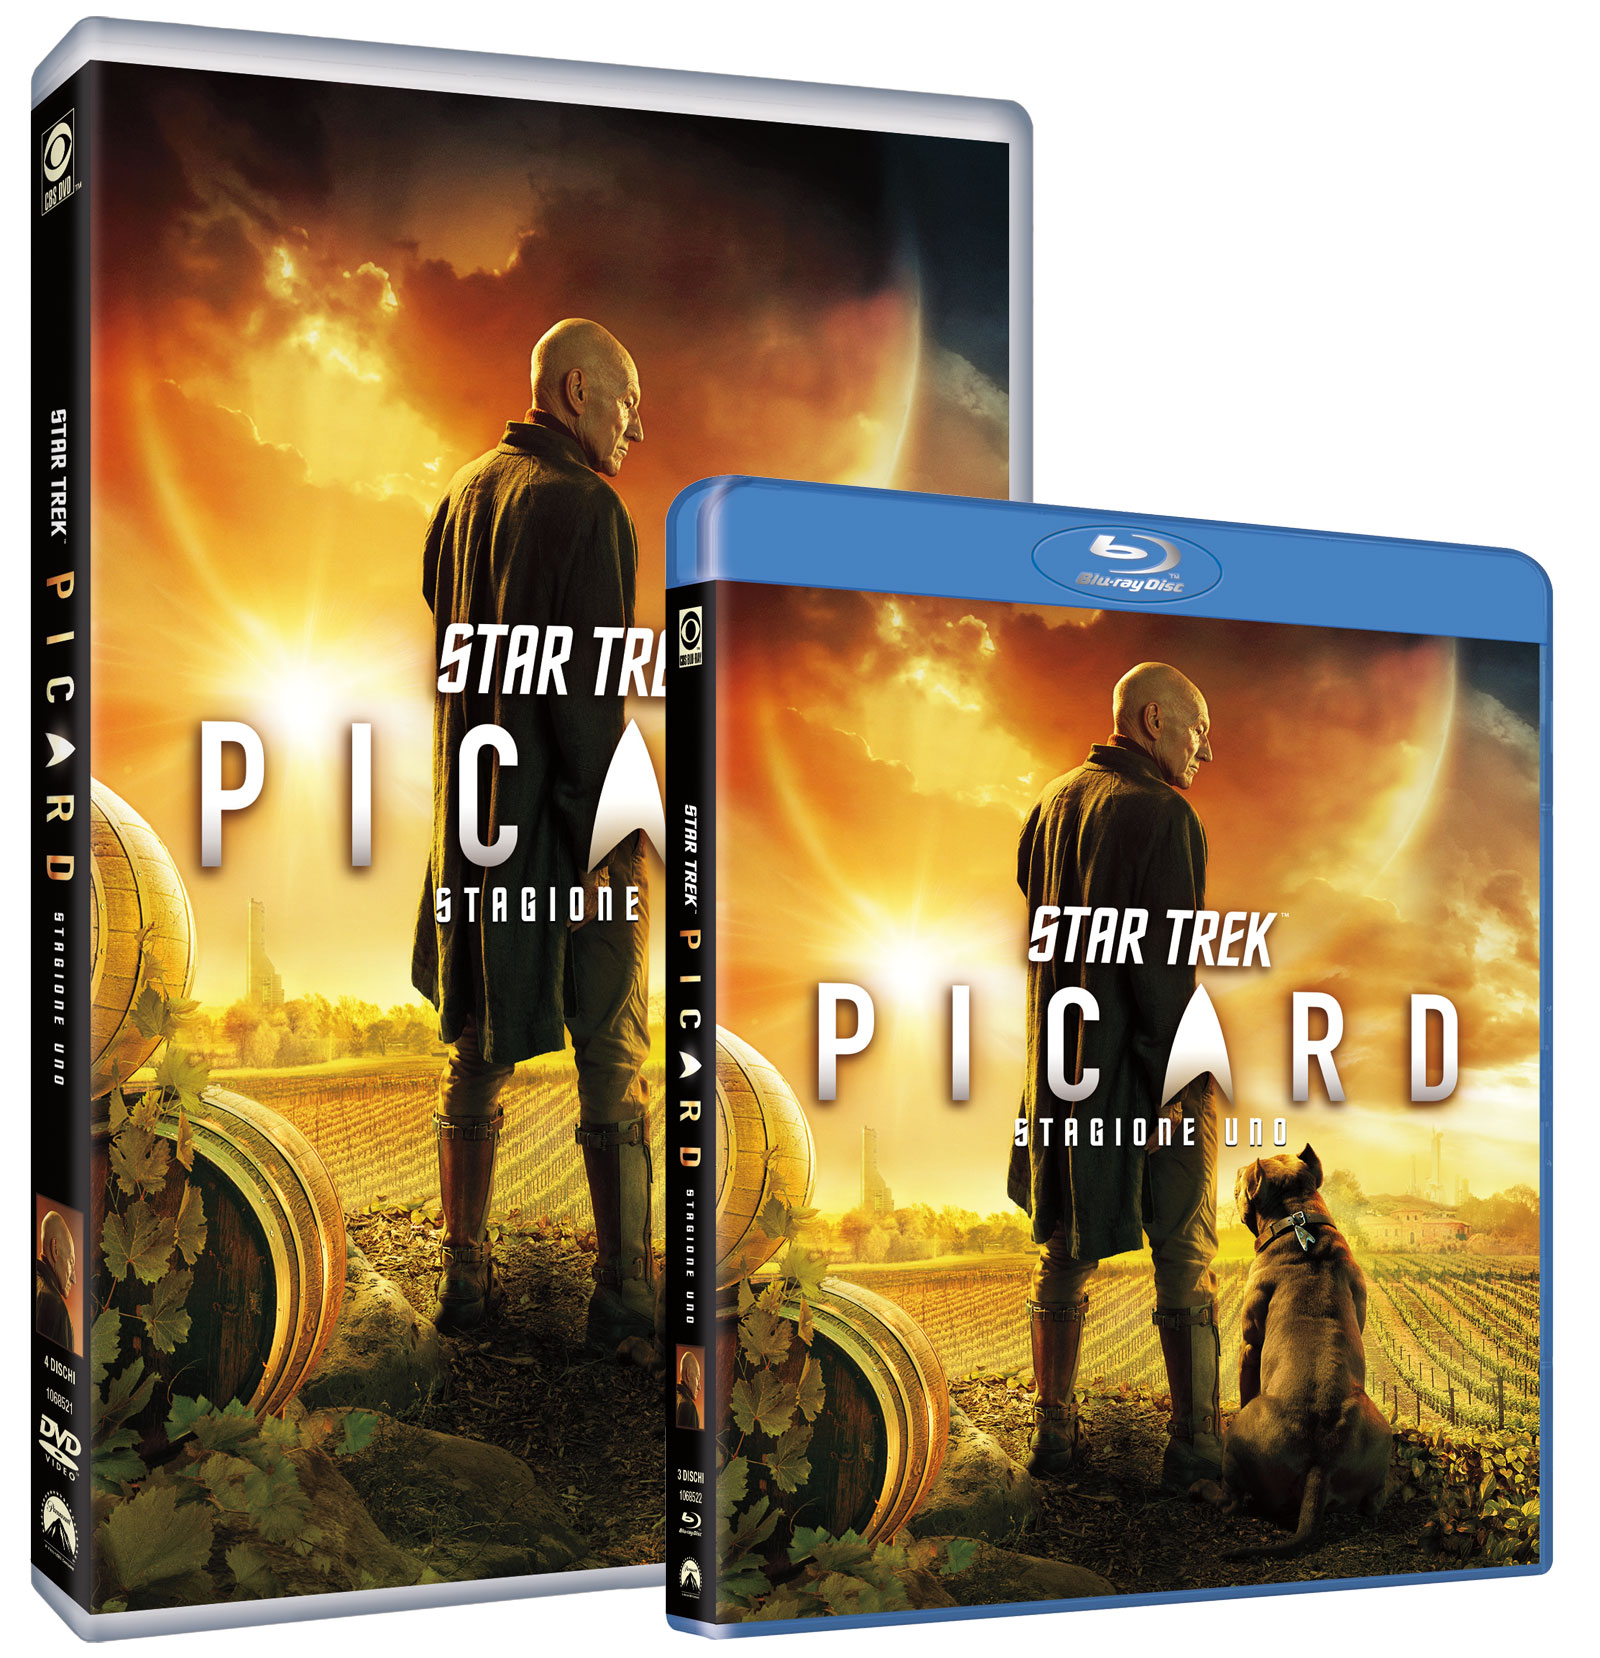 Star Trek Picard in DVD e Blu-ray